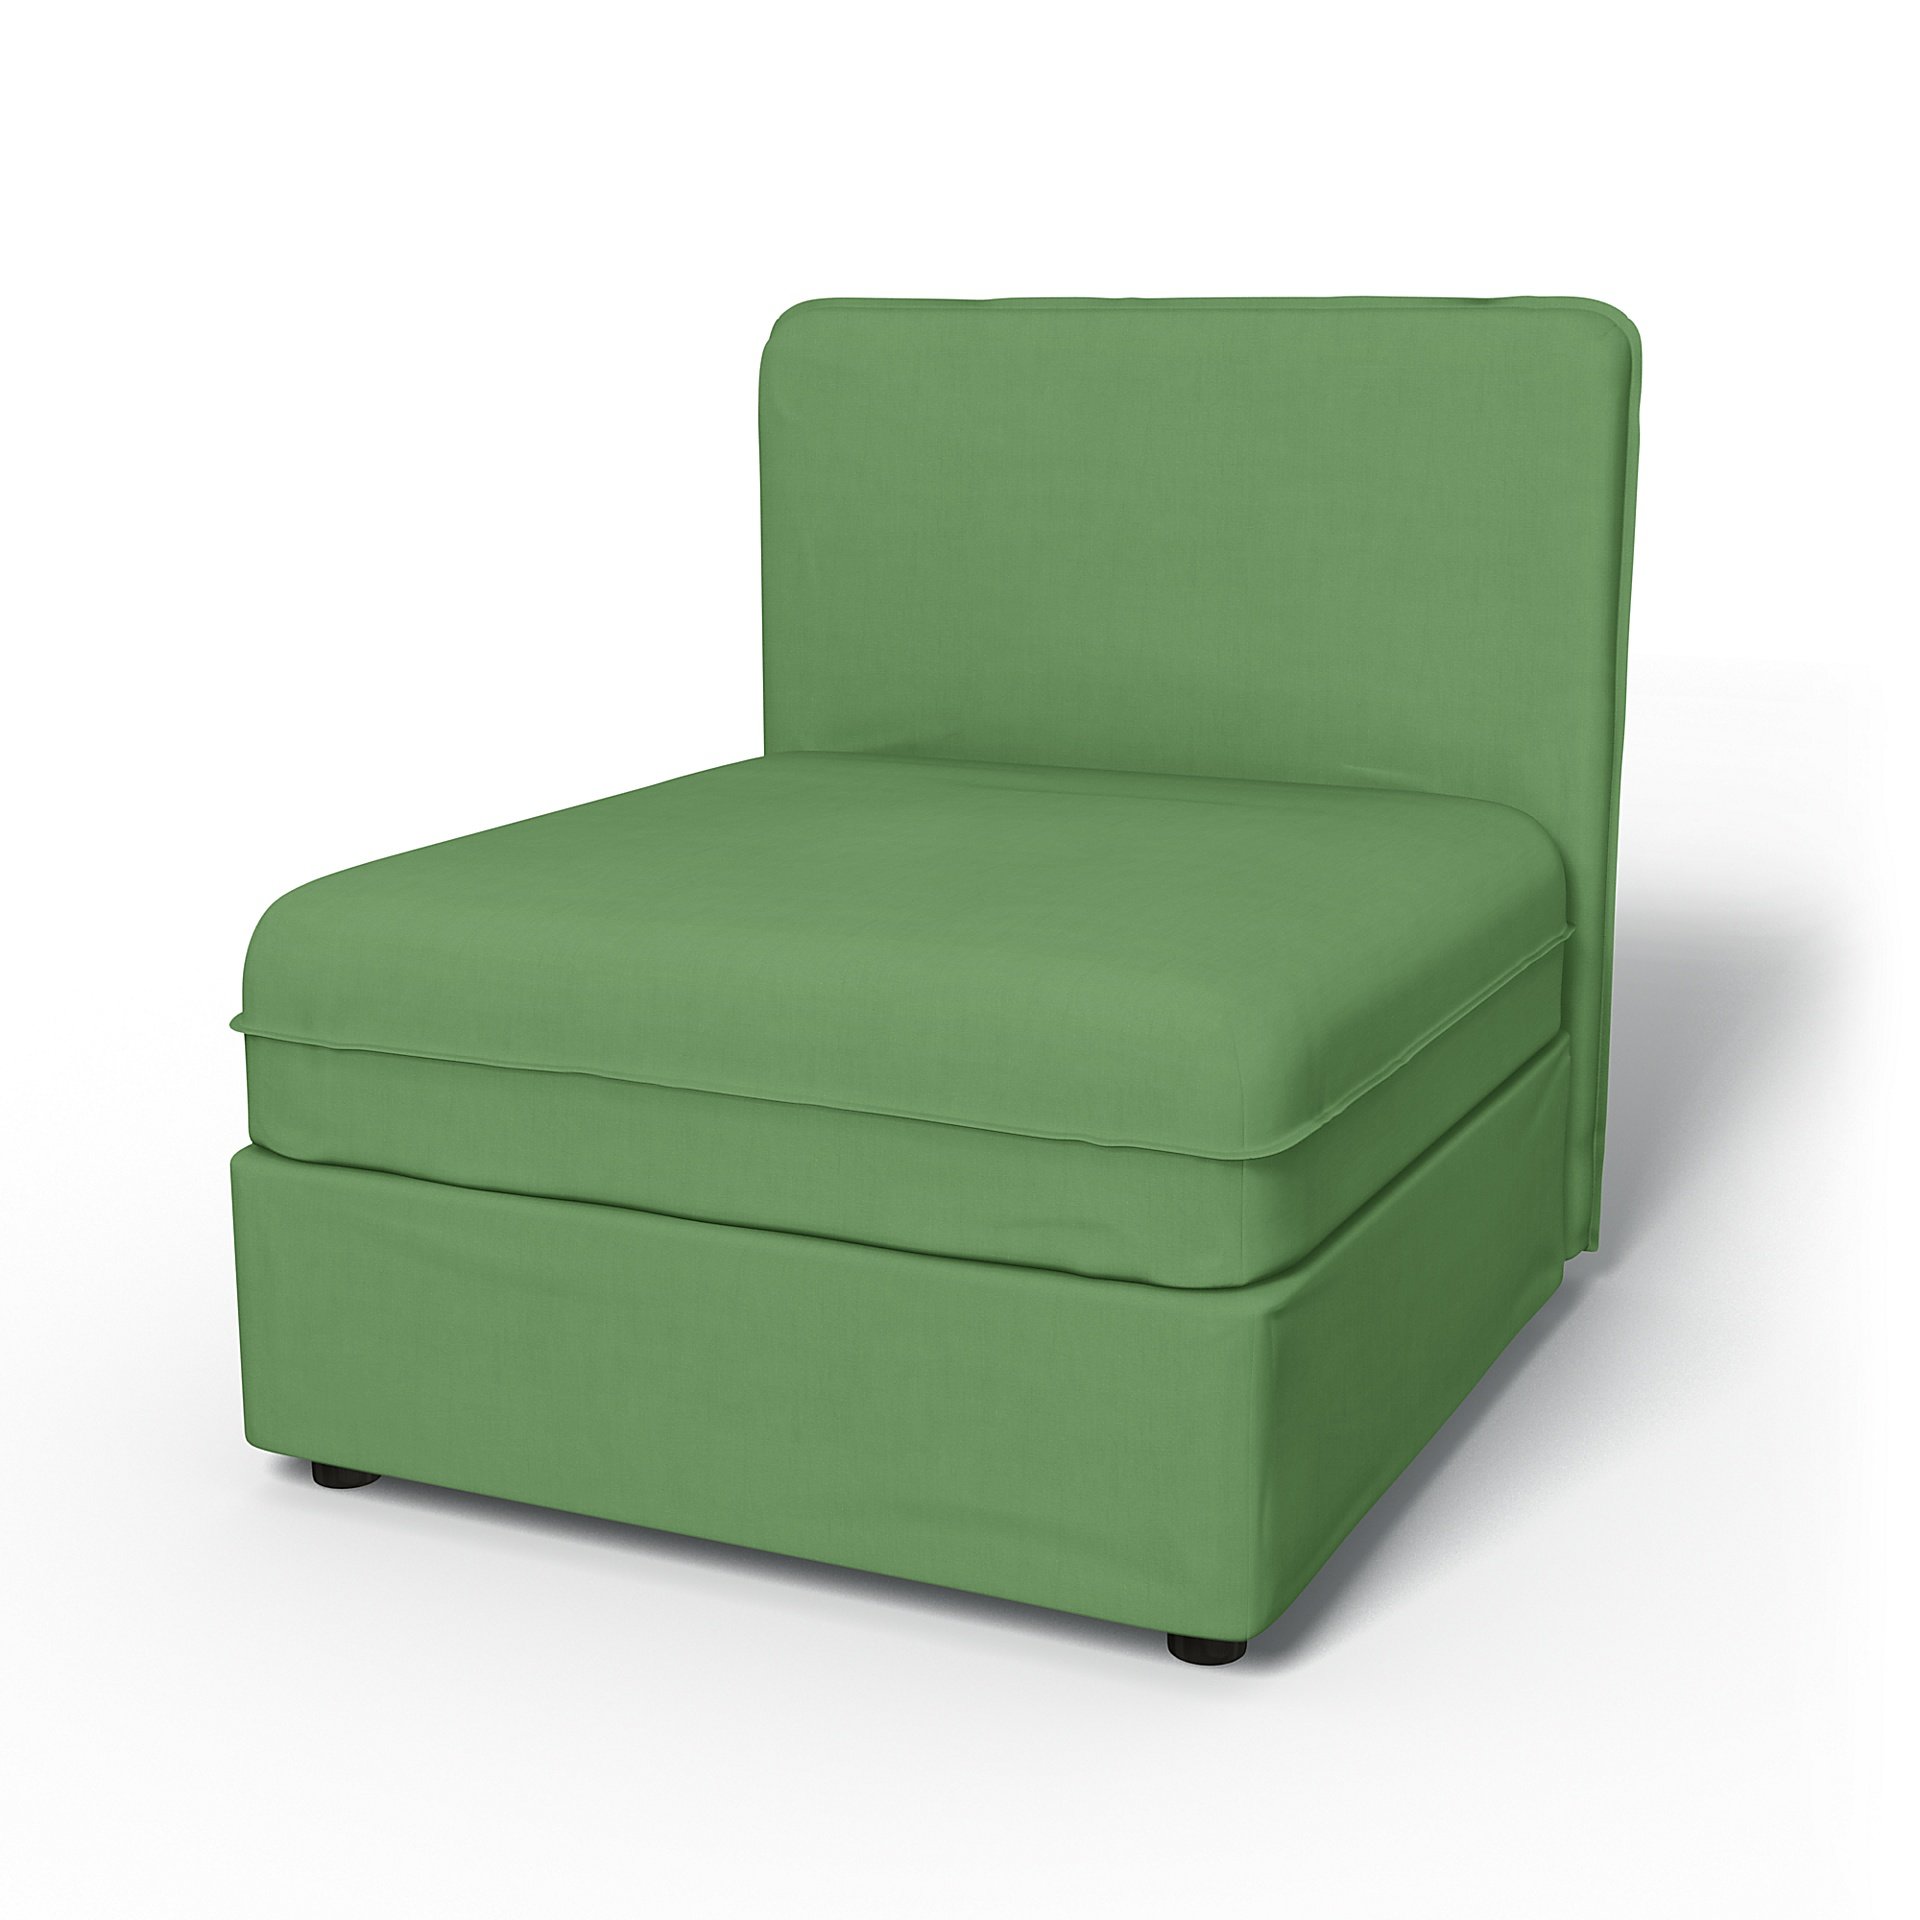 IKEA - Vallentuna Seat Module with Low Back Cover 80x80cm 32x32in, Apple Green, Linen - Bemz